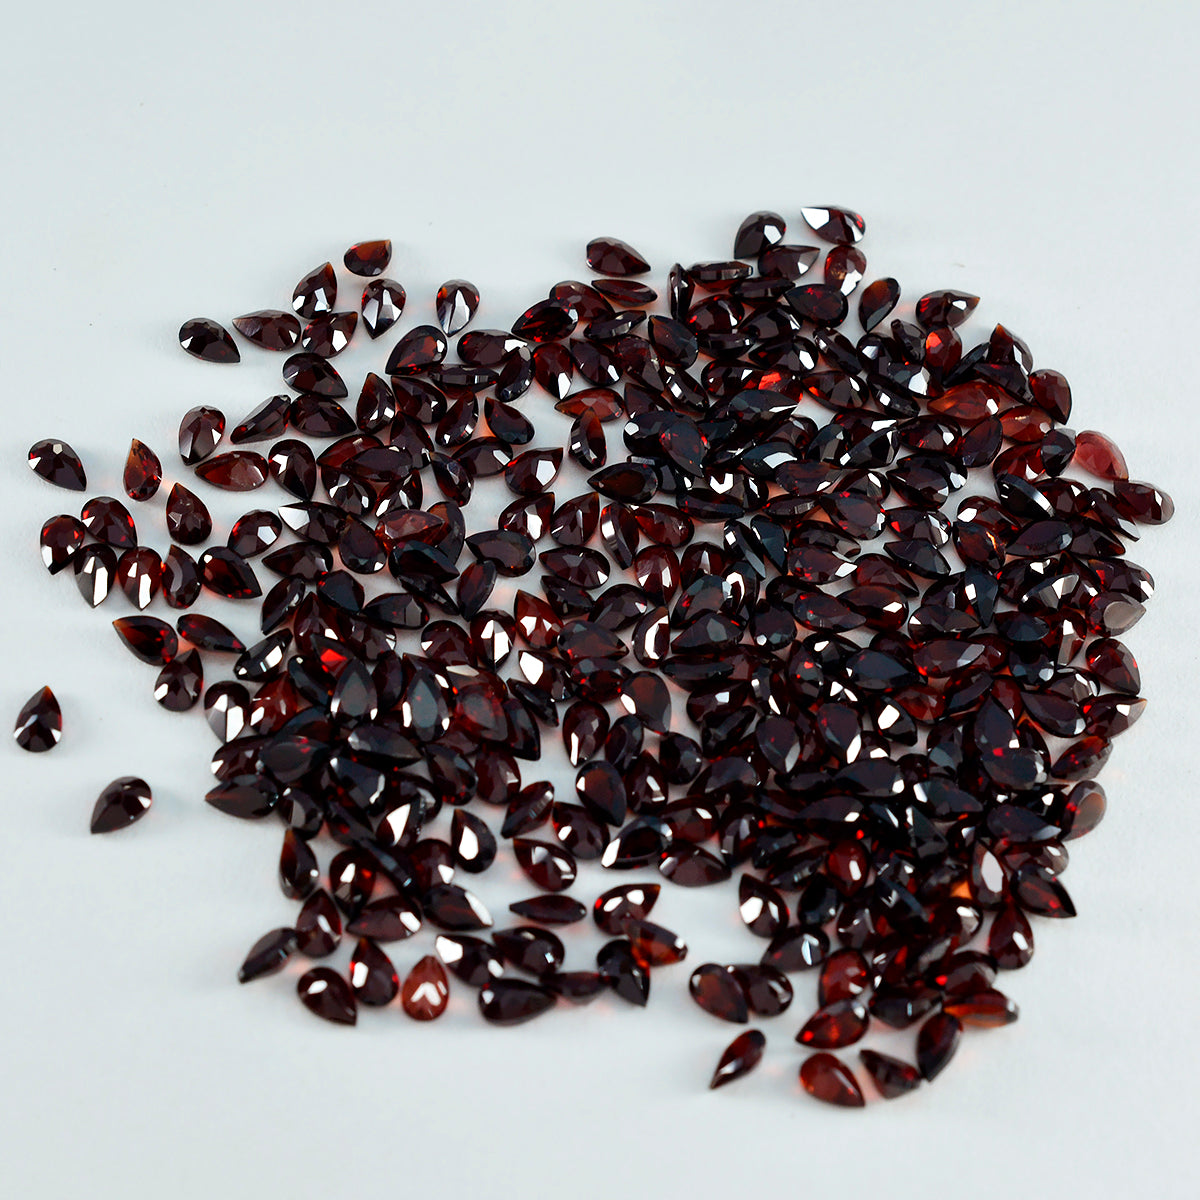 Riyogems 1PC Genuine Red Garnet Faceted 3X5 mm Pear Shape nice-looking Quality Gems